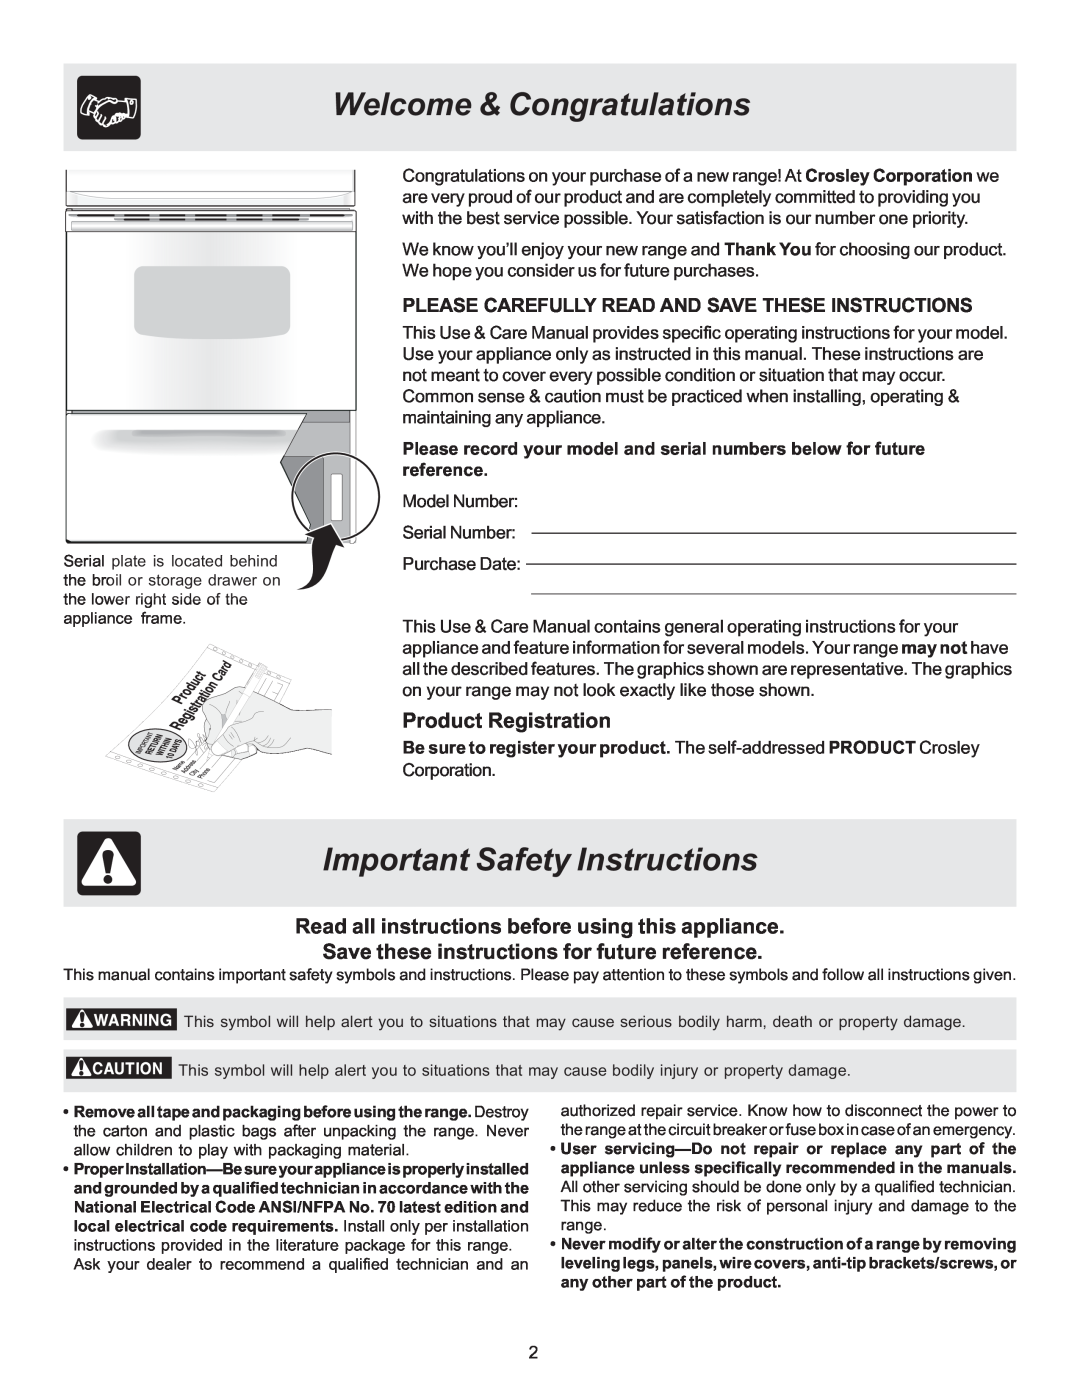 Crosley ES100 important safety instructions Welcome & Congratulations, Important Safety Instructions, Product Registration 